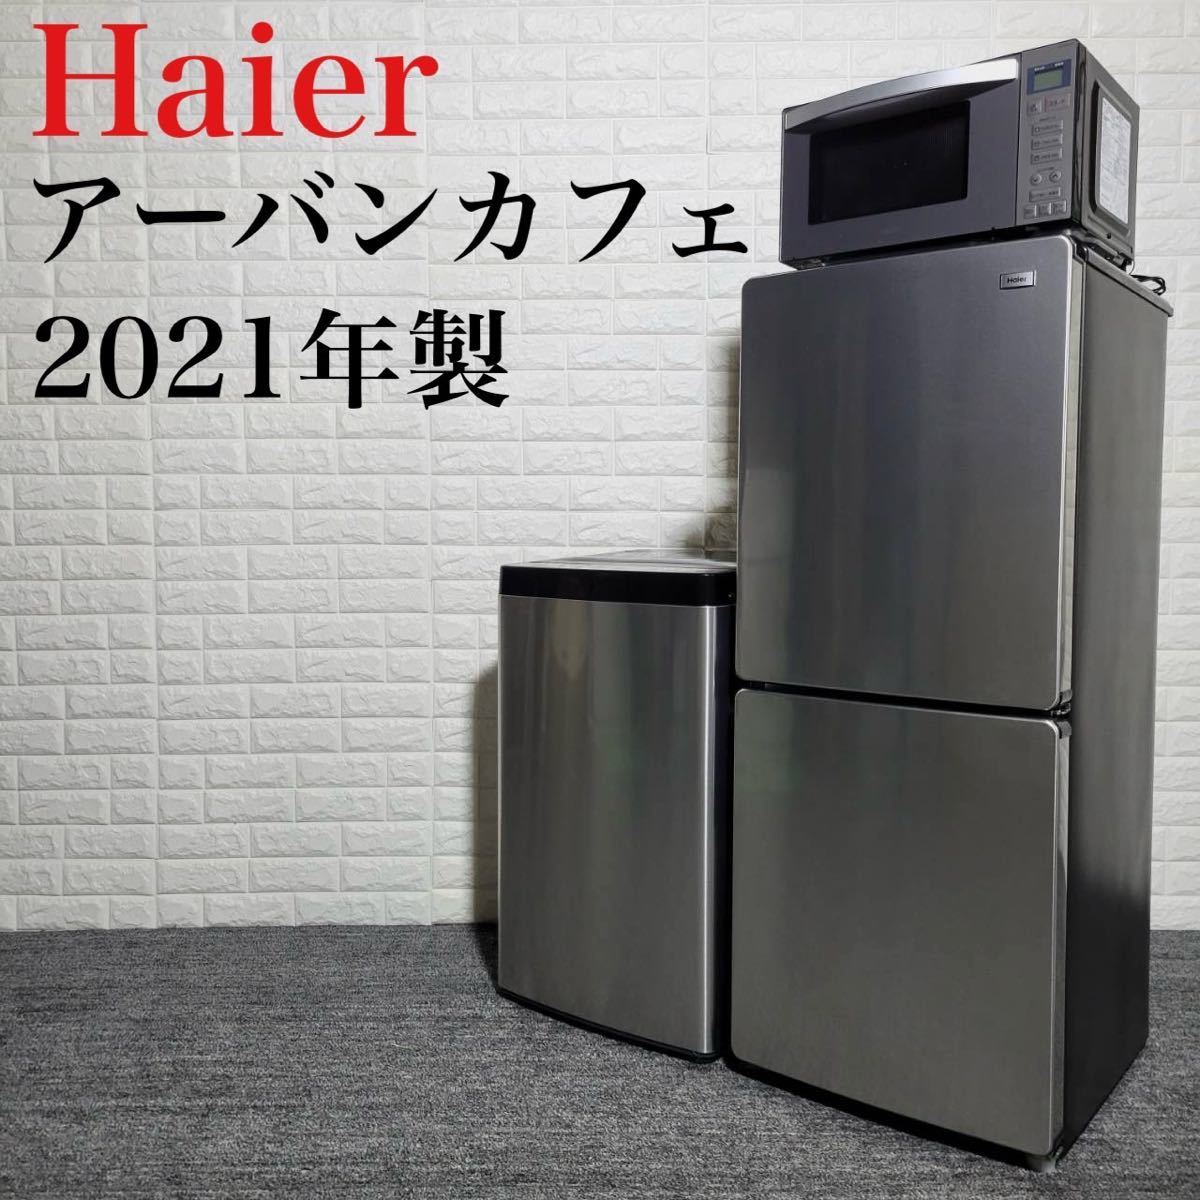 Haier アーバンカフェ 冷蔵庫 洗濯機 電子レンジ 生活家電セット M0643